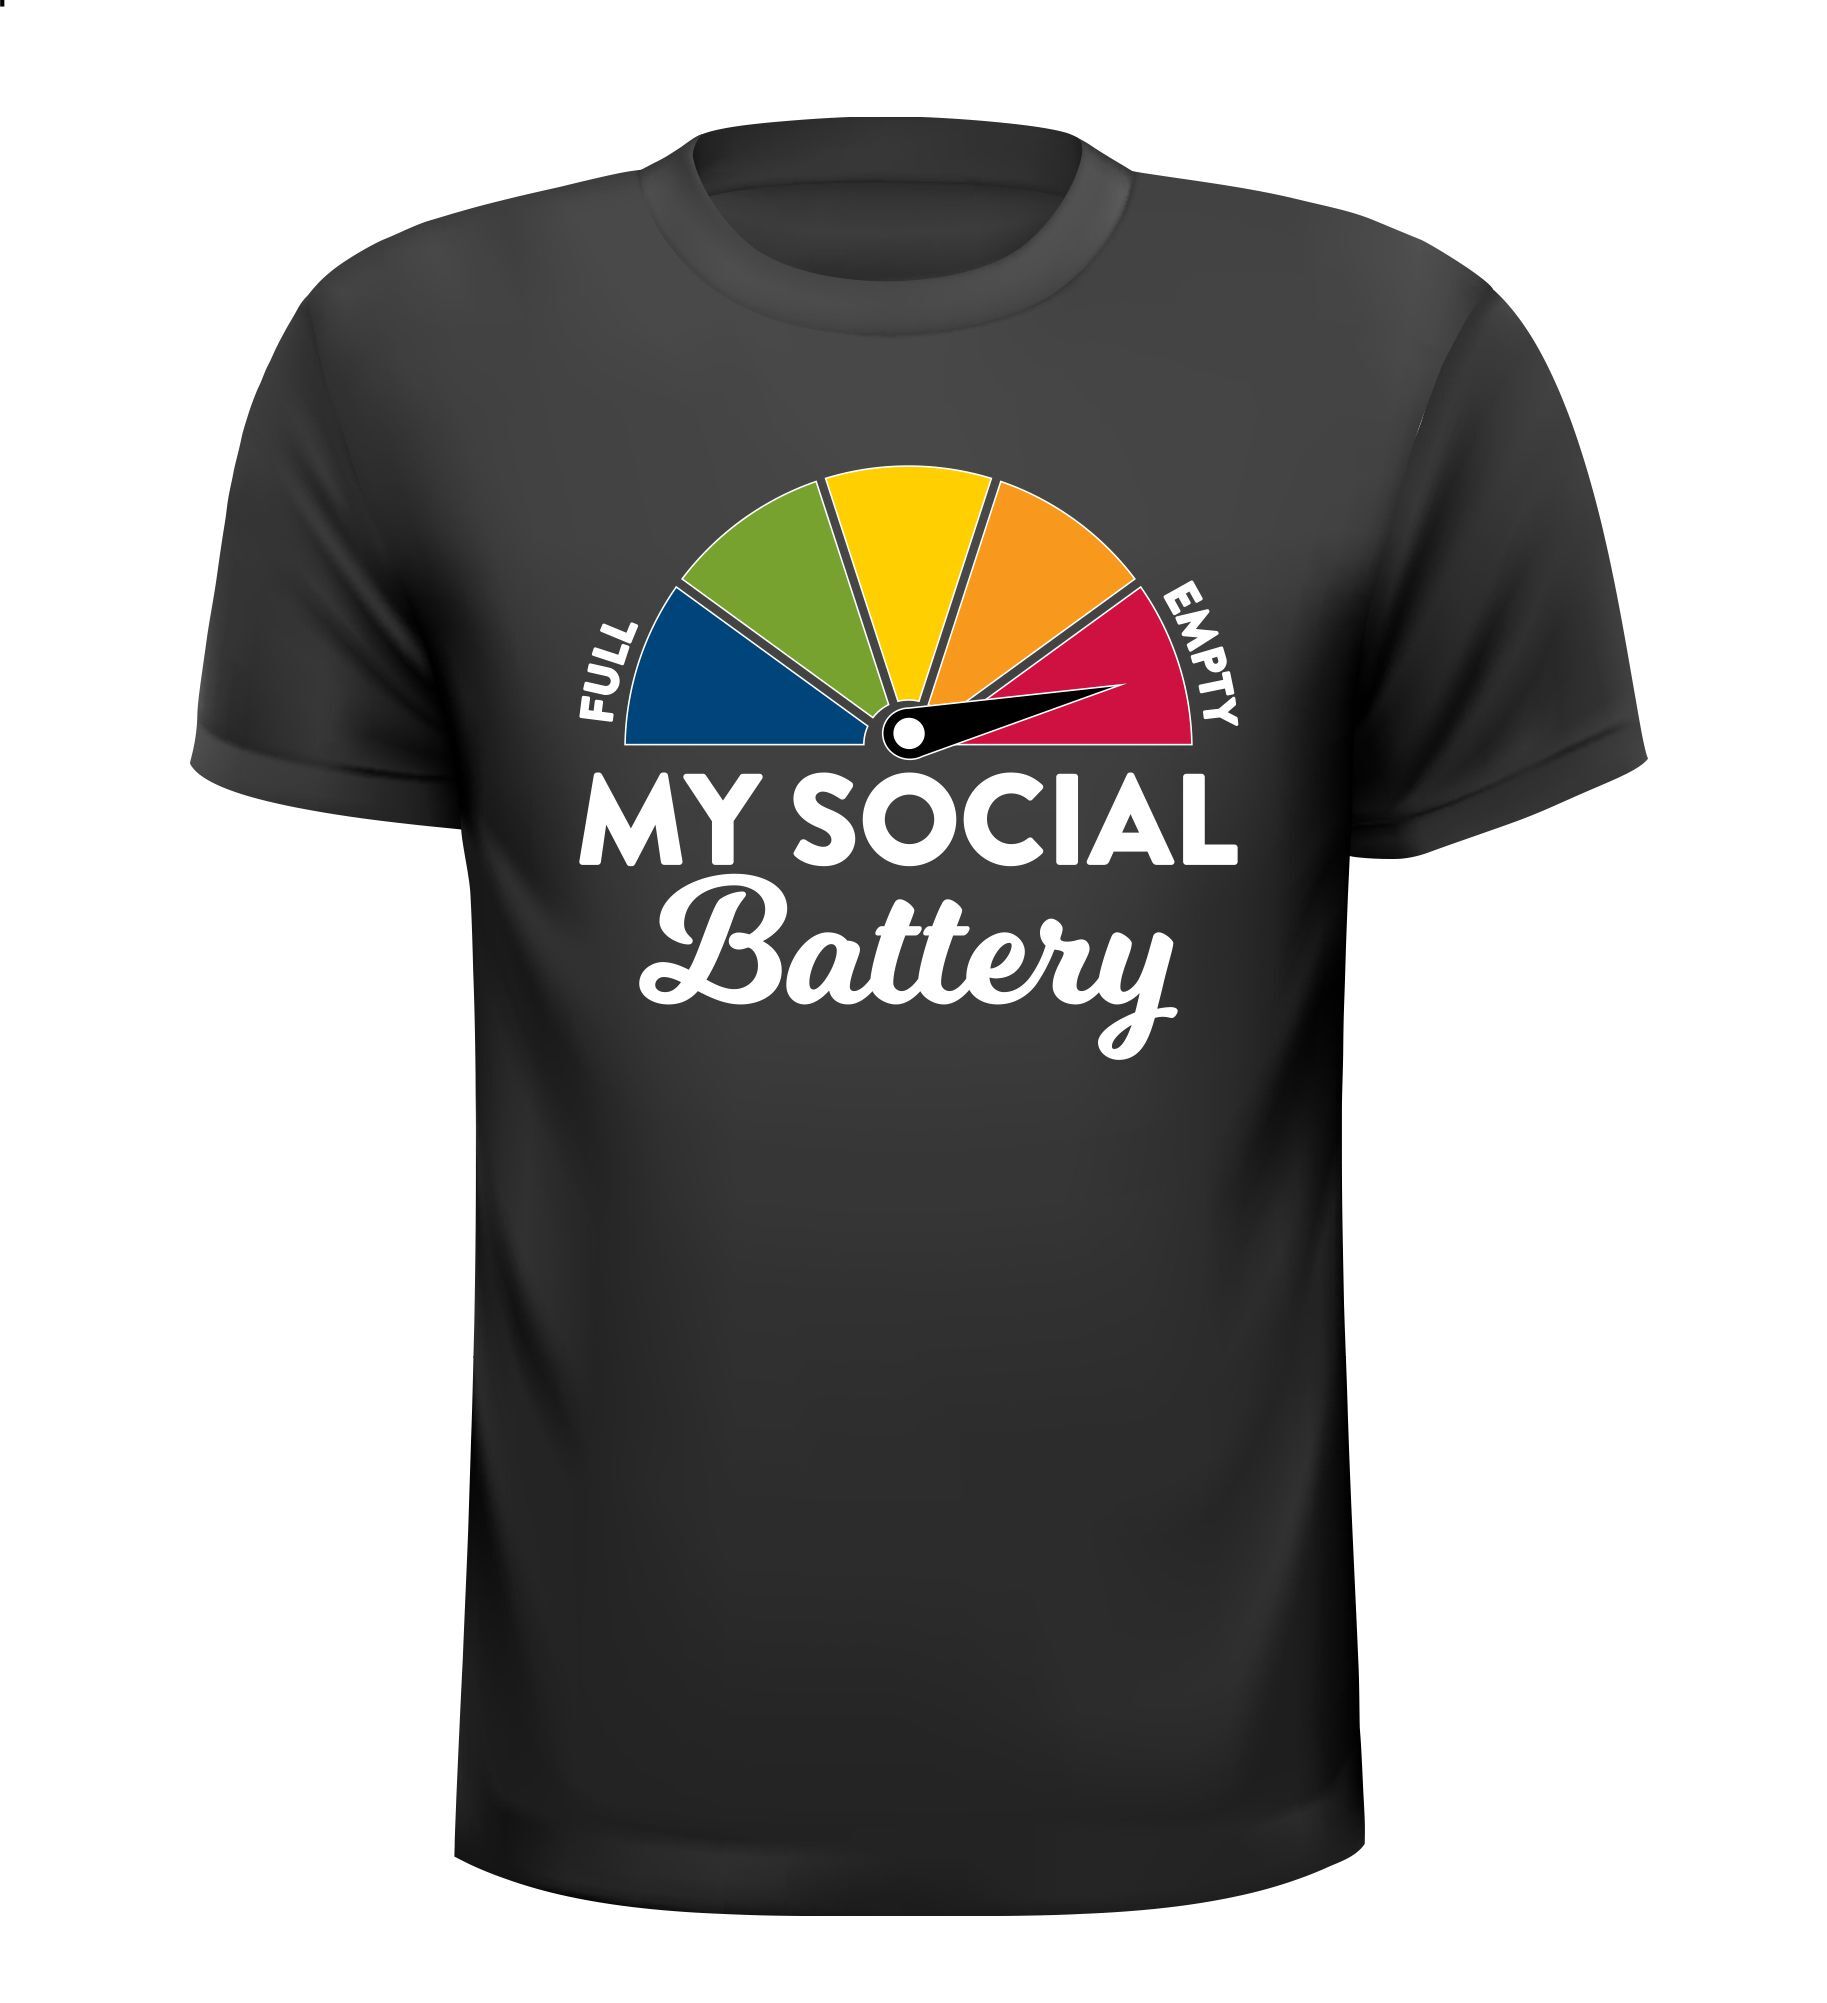 T-shirt social battery is empty sociale batterij is leeg! grappig